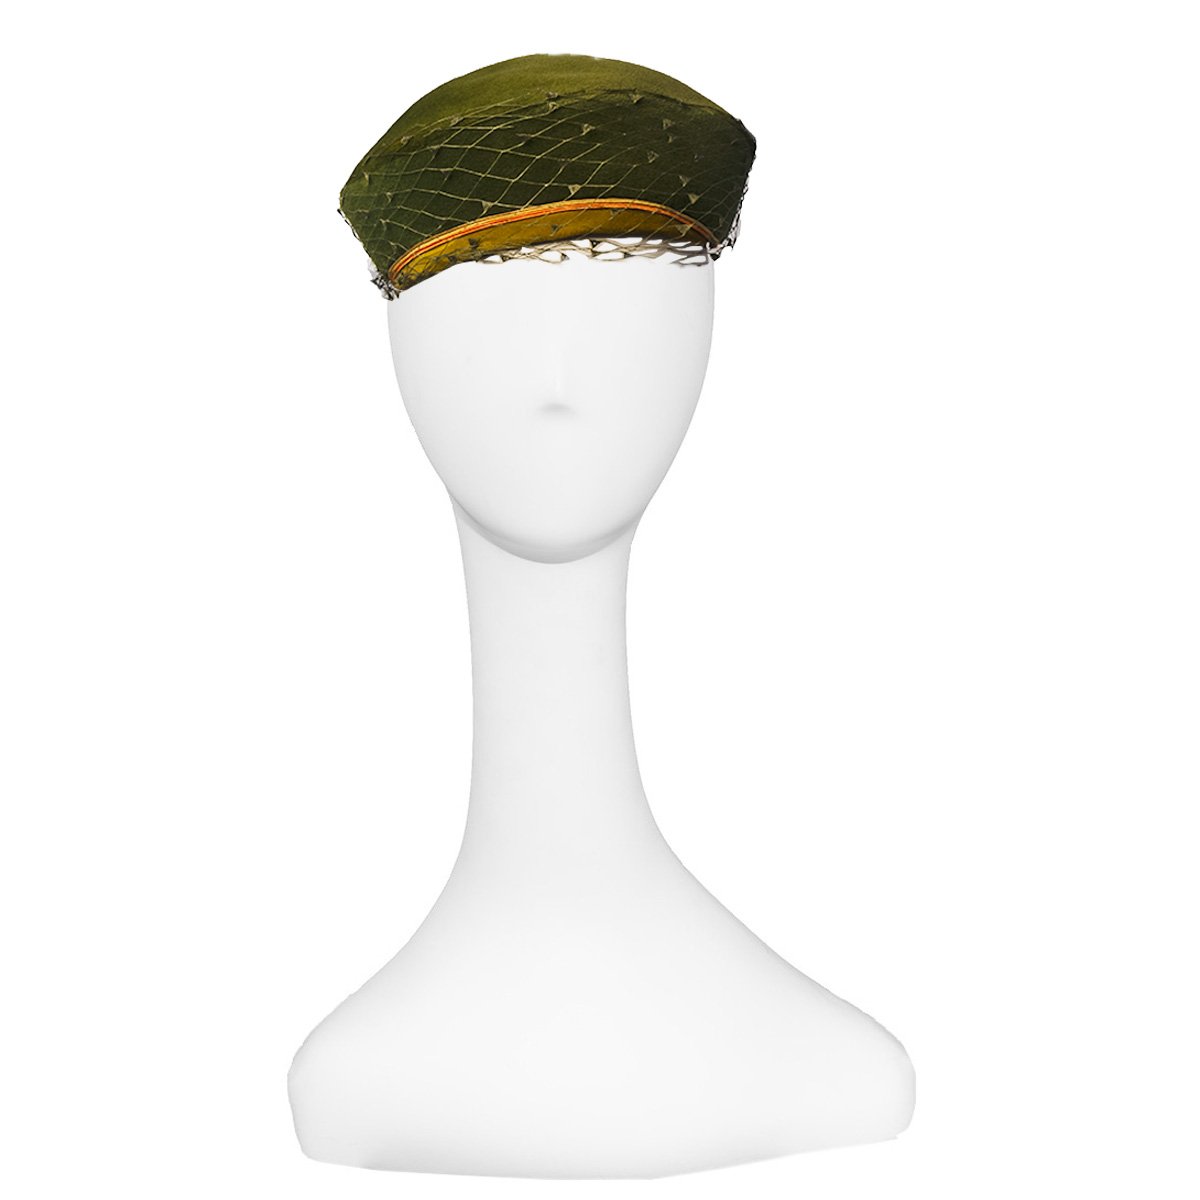 Vintage 1960s Pillbox Hat by Leslie James, Green & Yellow Wool Felt